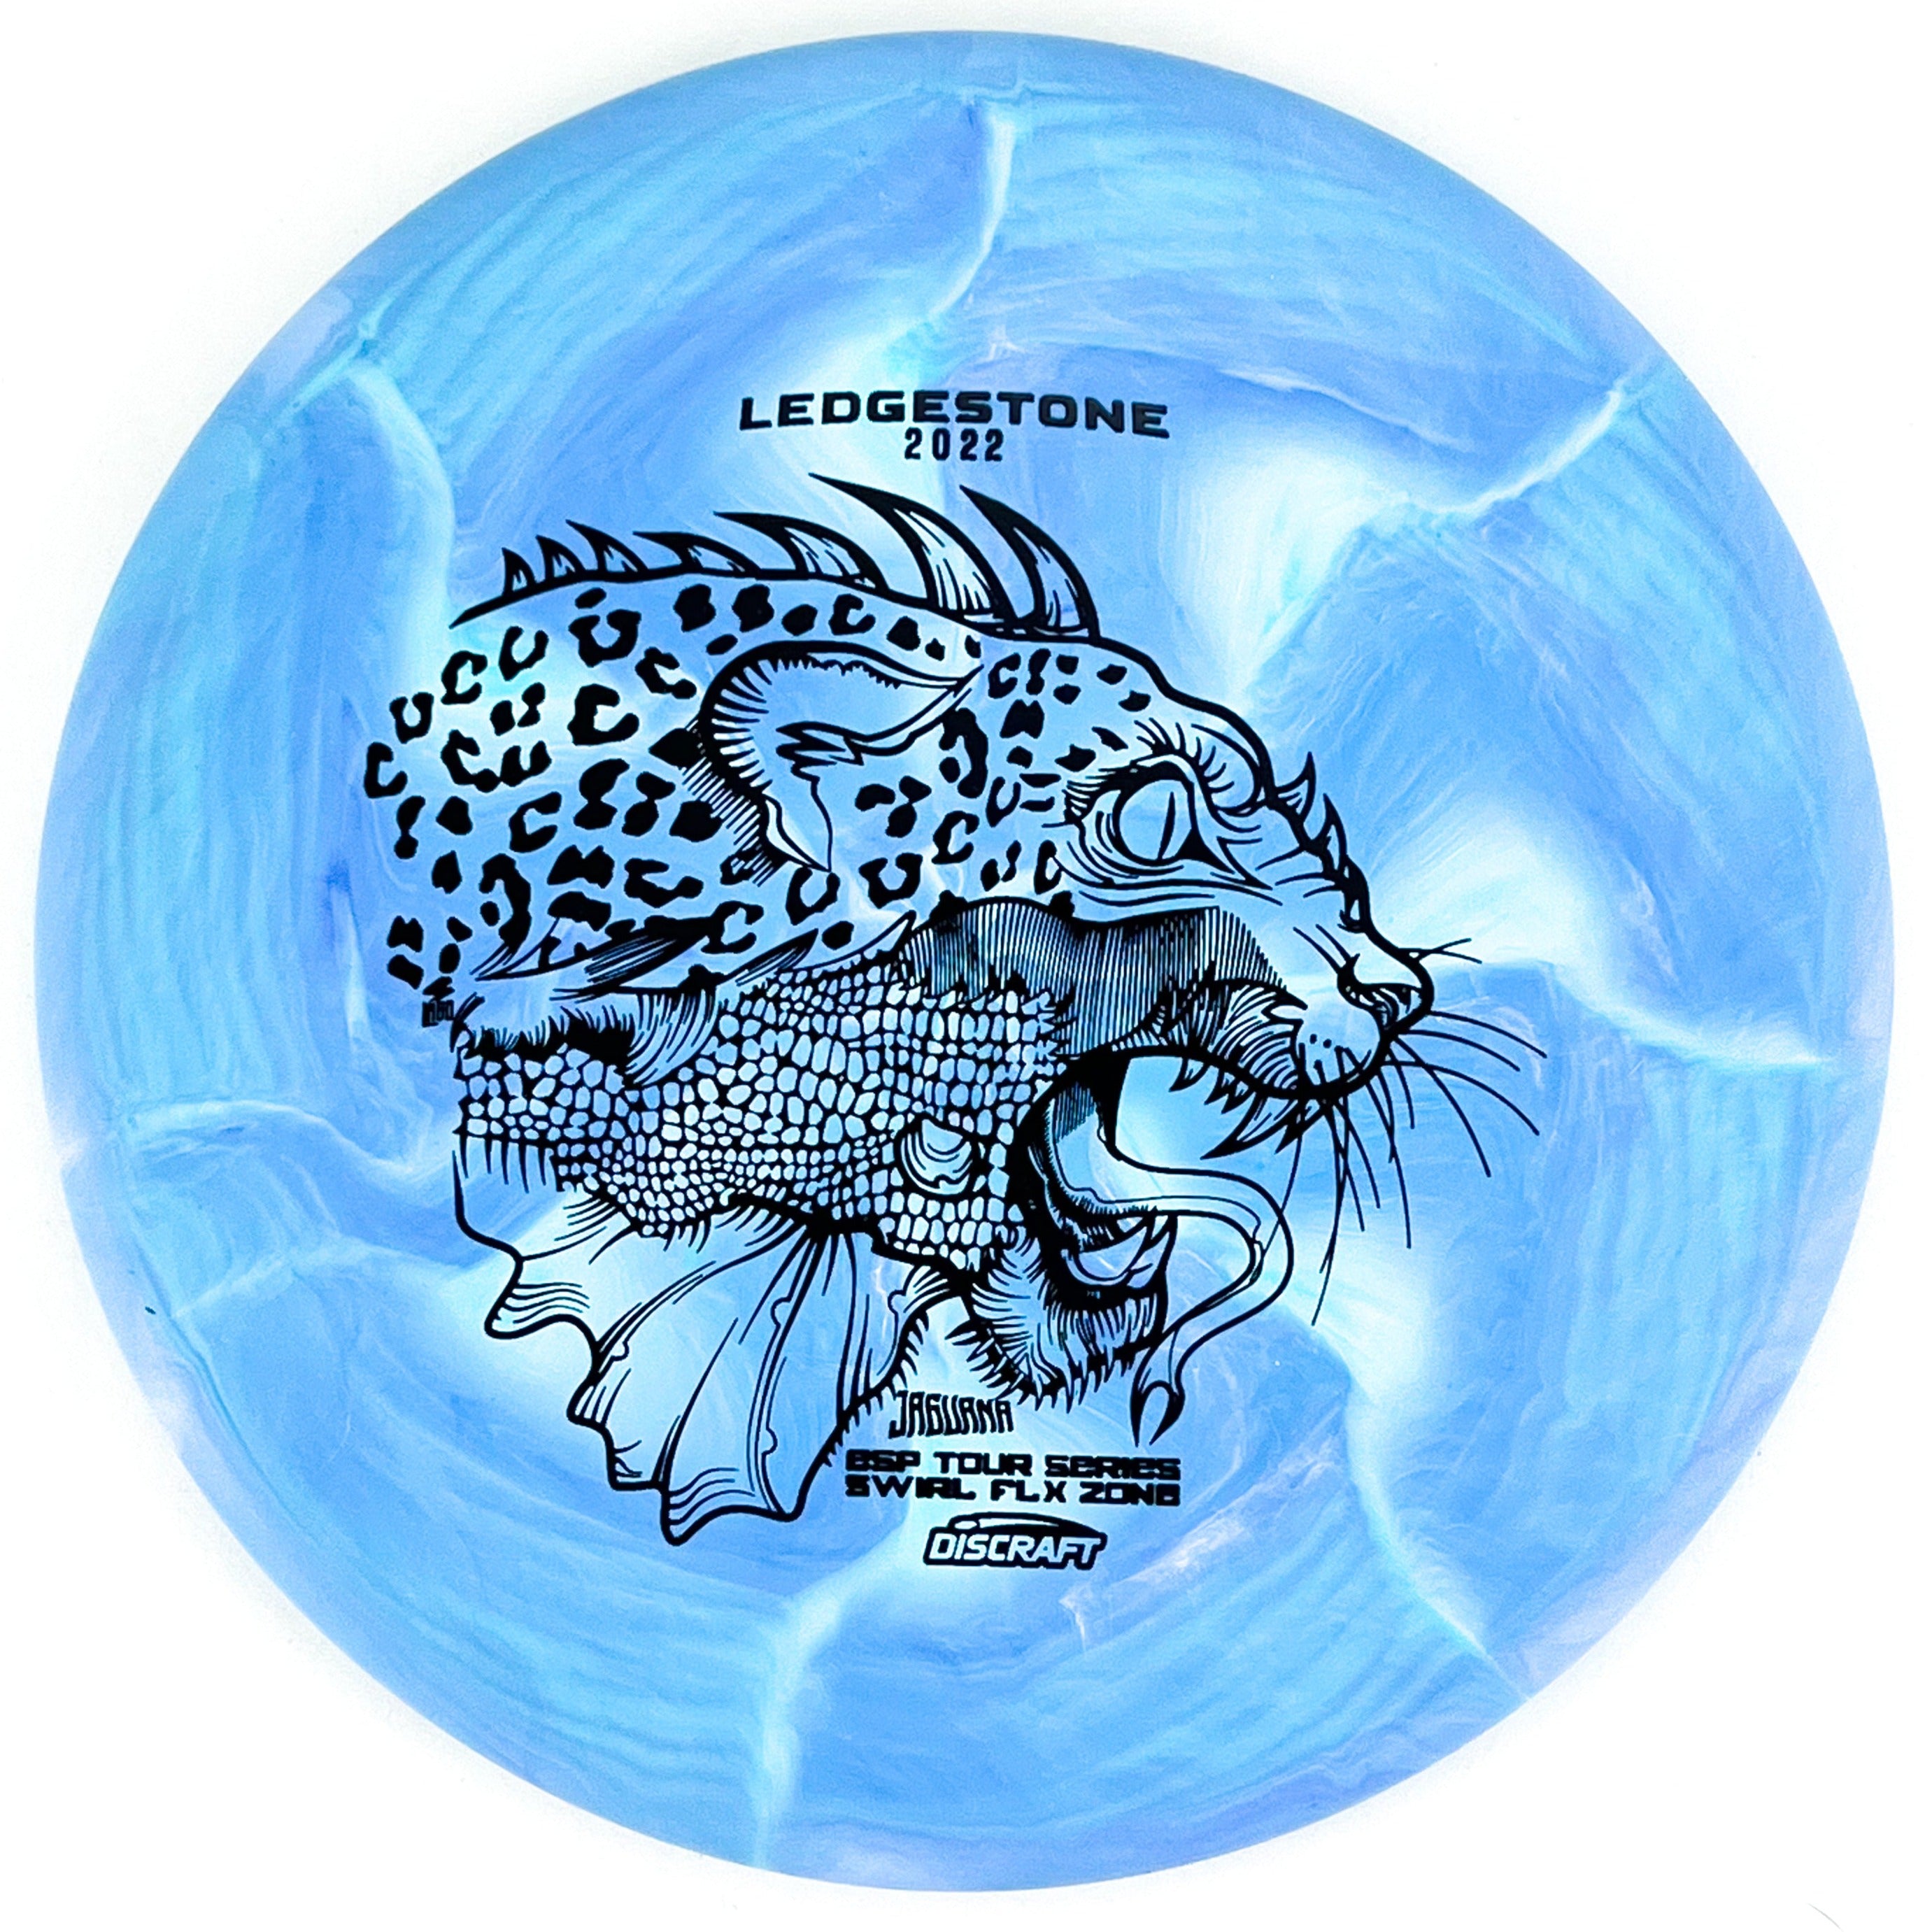 Blue 2022 Ledgestone Tour Series ESP Swirl Flx Jaguana Zone disc golf putt and approach disc from Discraft Disc Golf.